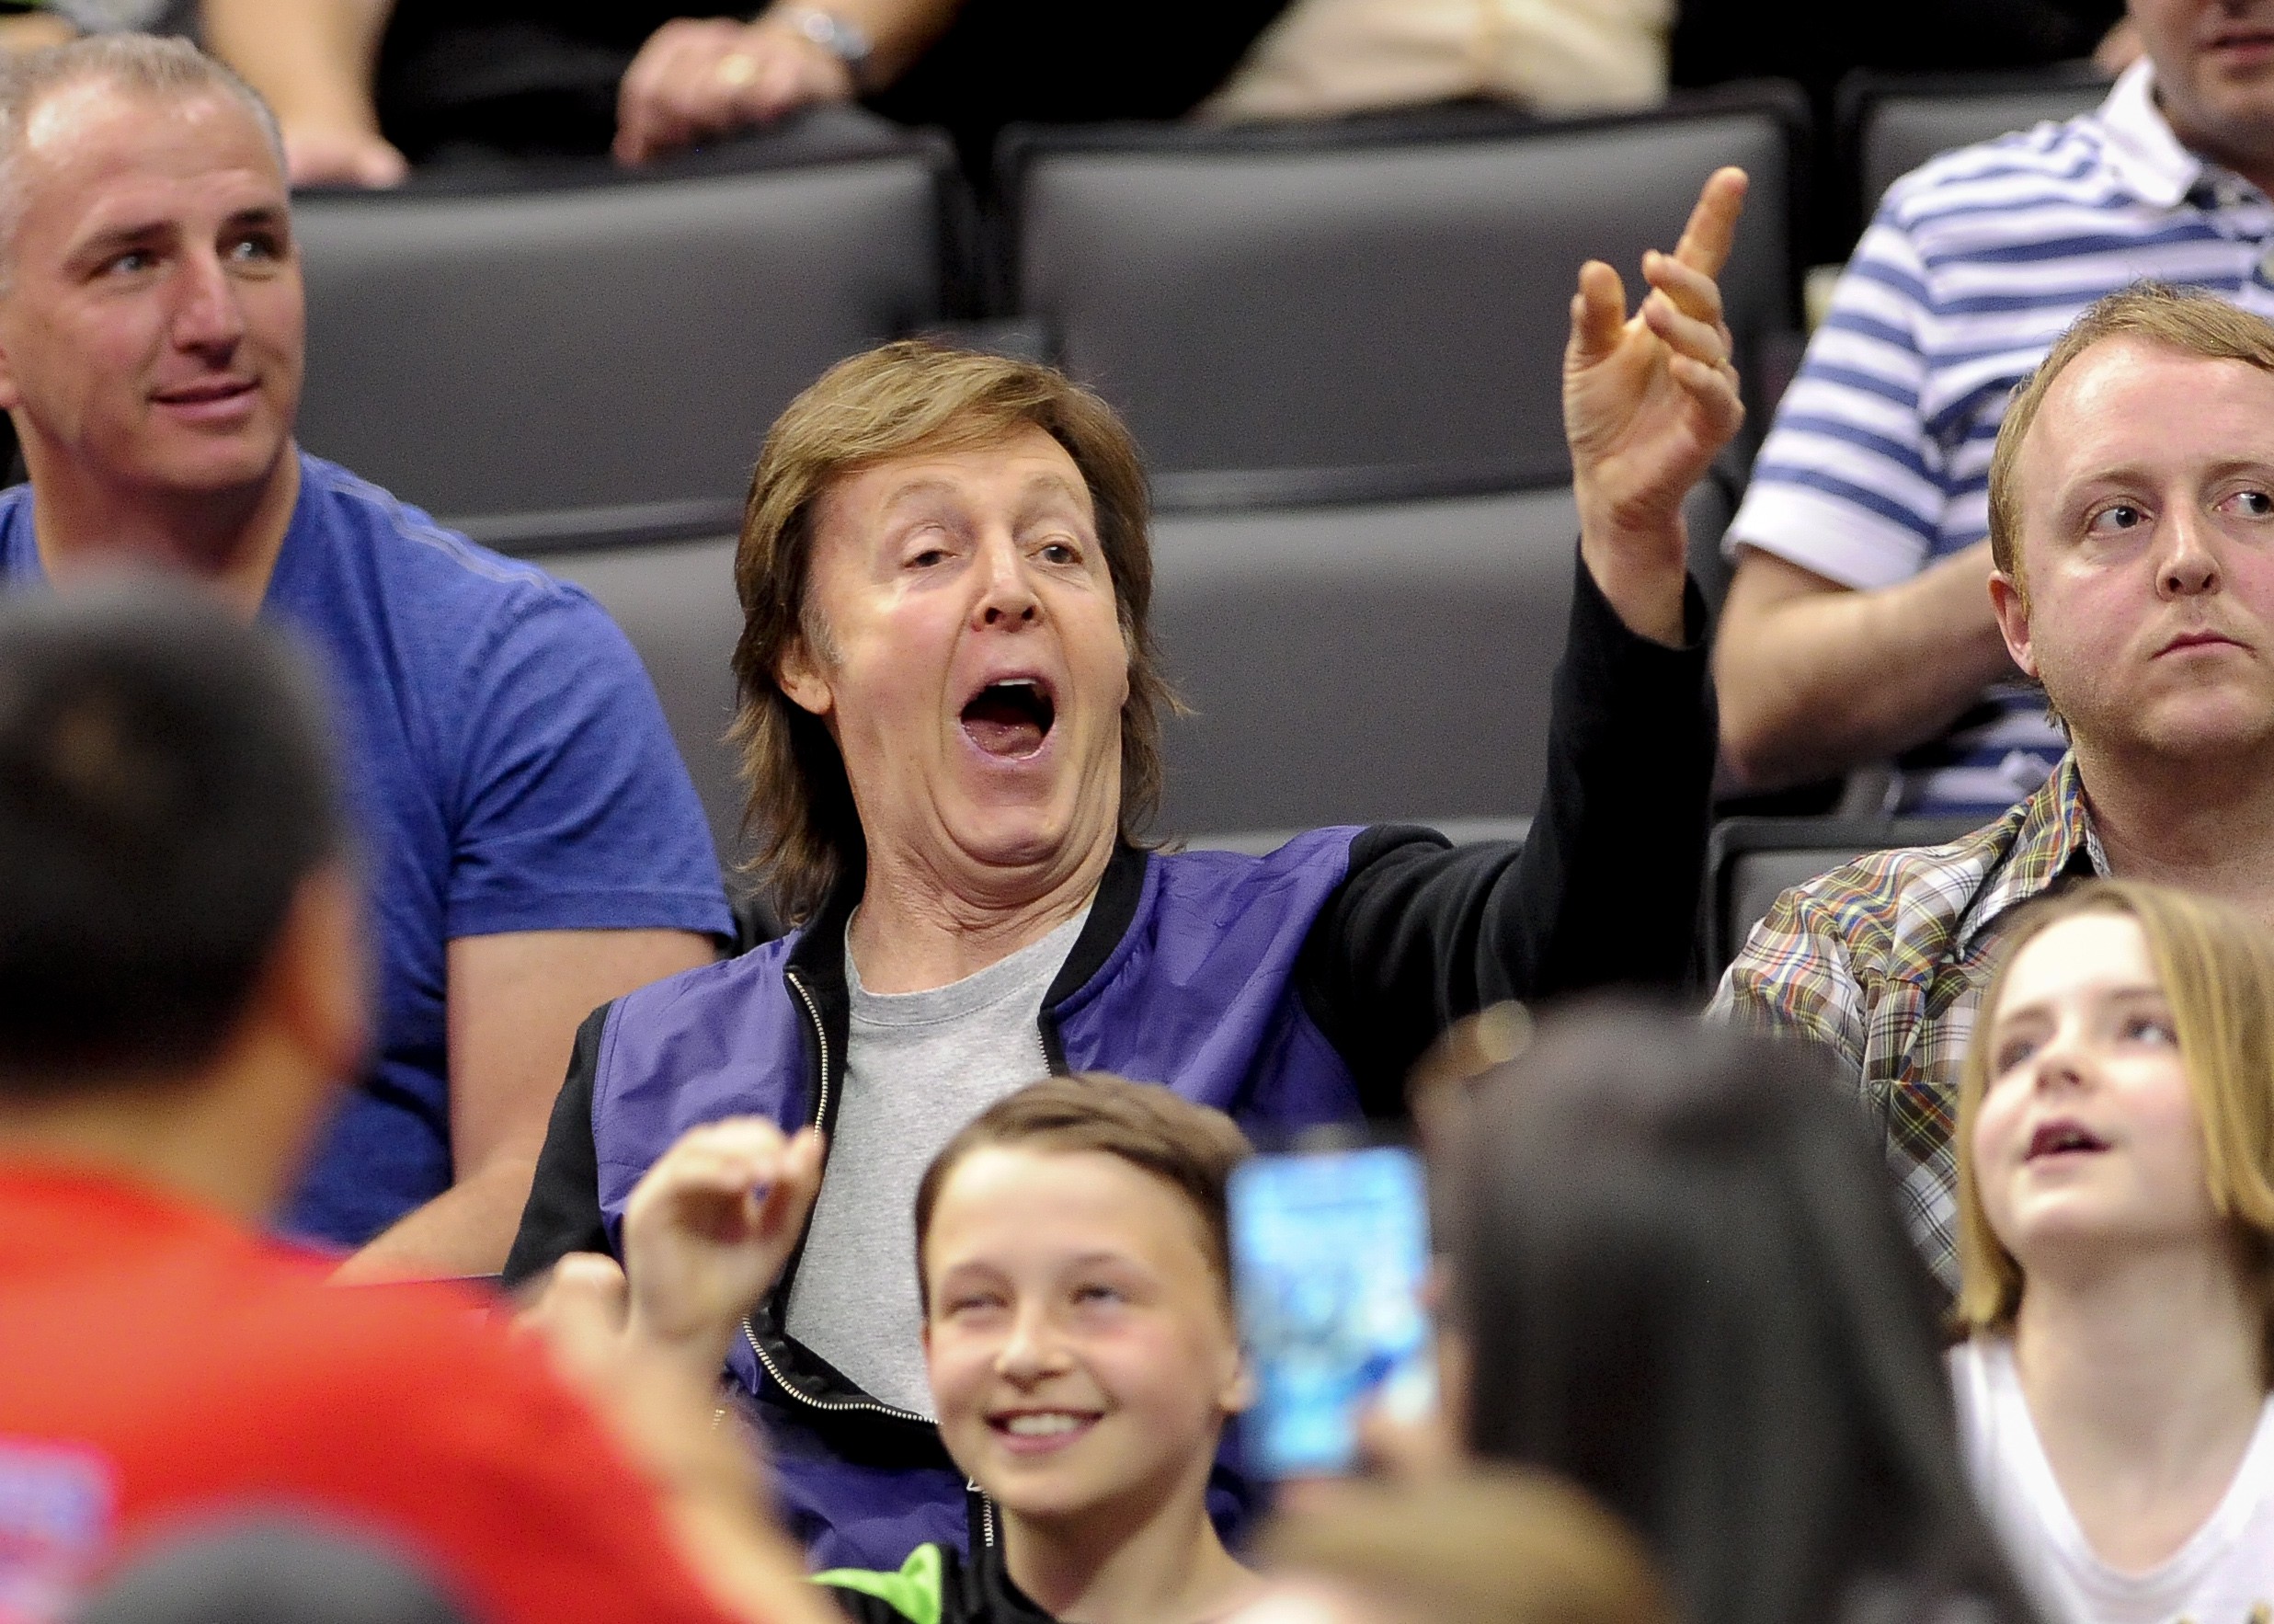 Paul McCartney (Foto: AP)